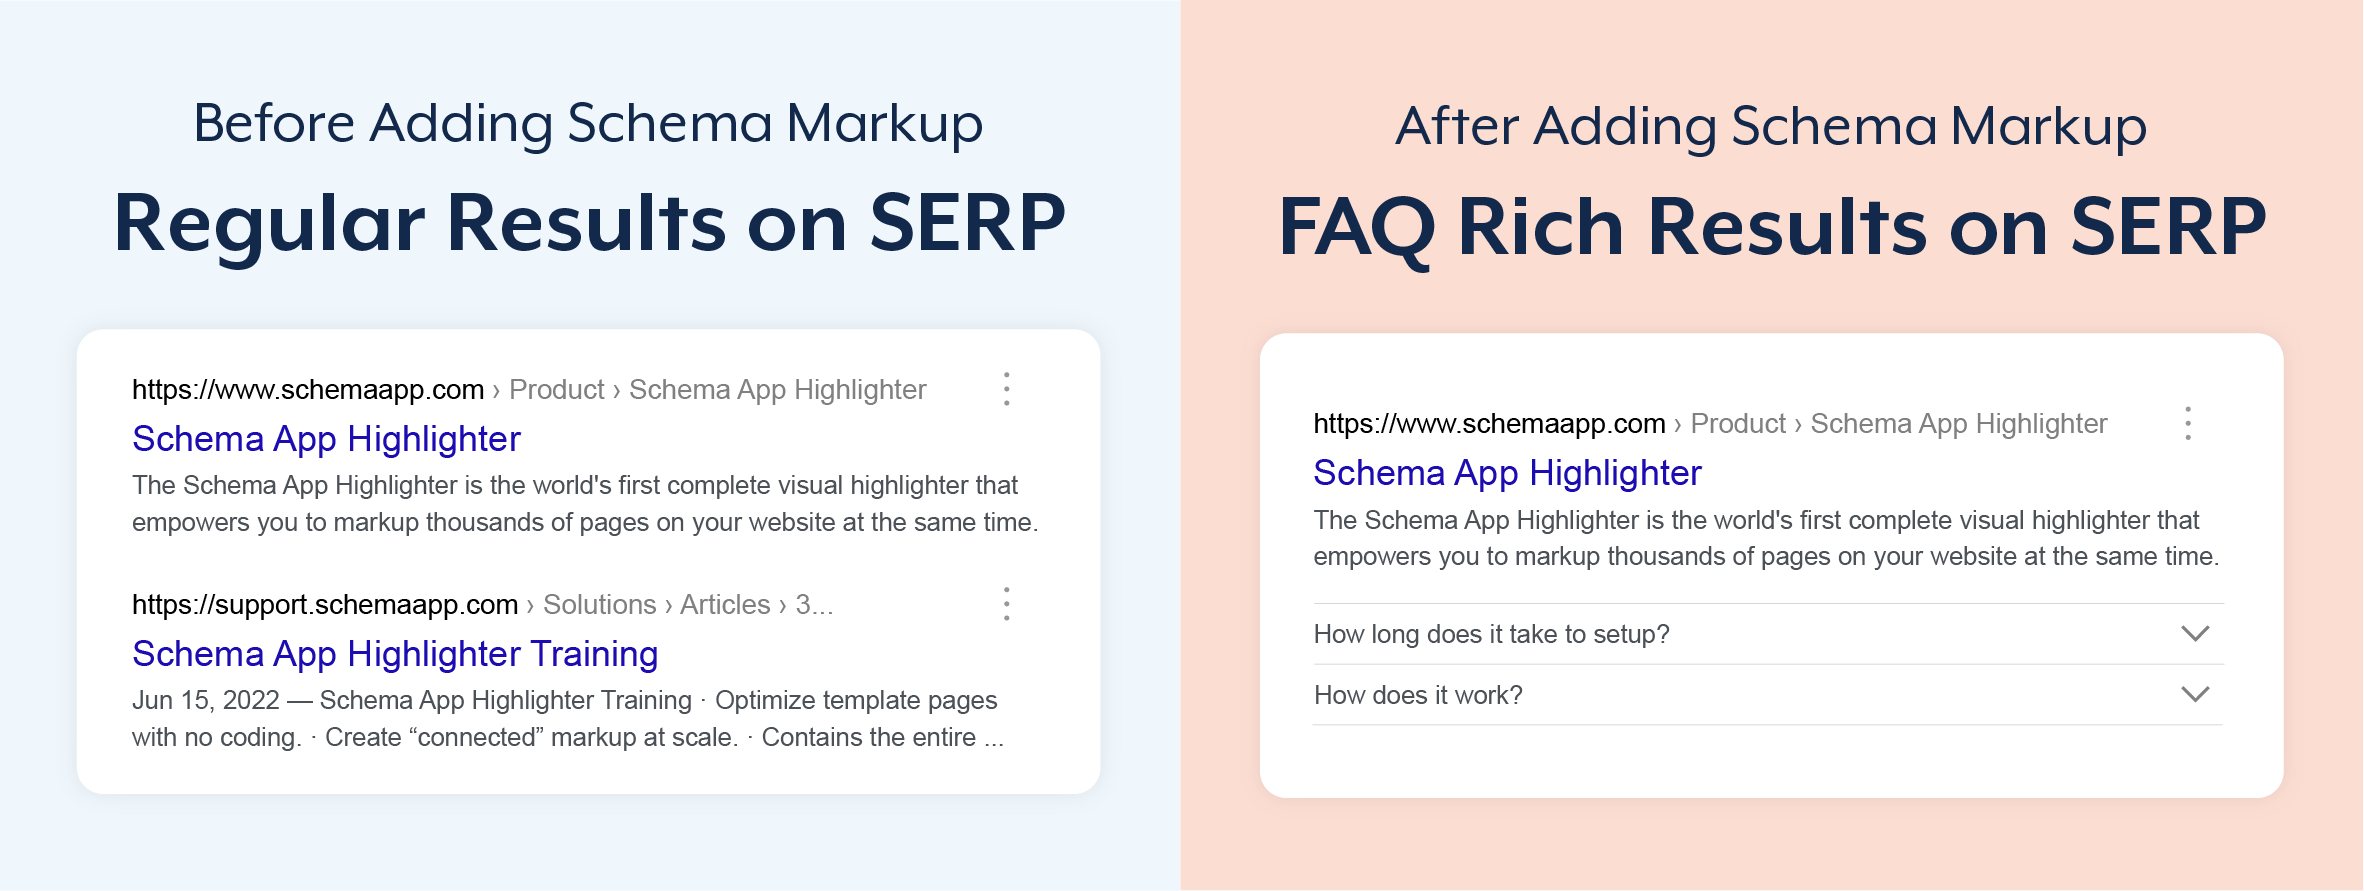 Before vs. After Schema Markup - FAQ Rich Result